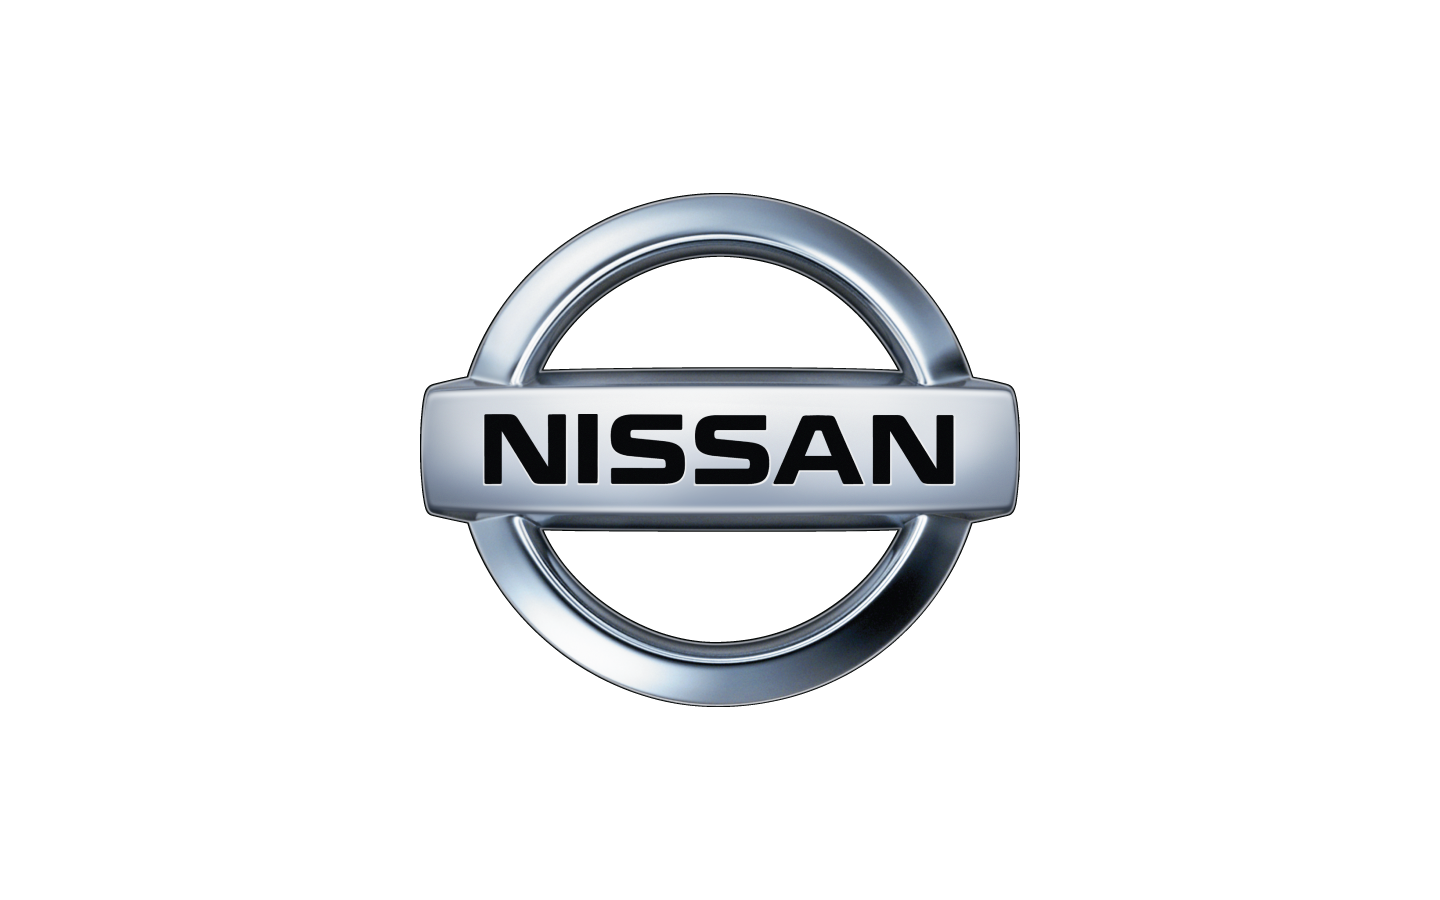 Nissan-logo-2013-1440x900.png